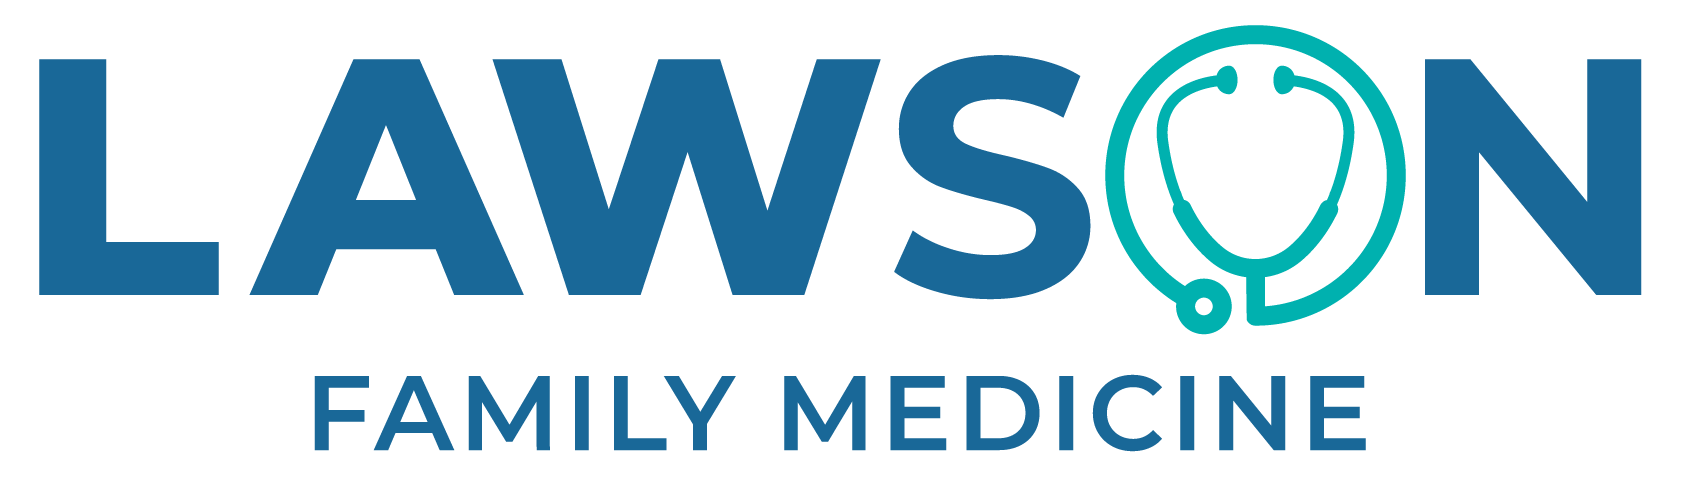 Lawson Family Medicine Logo